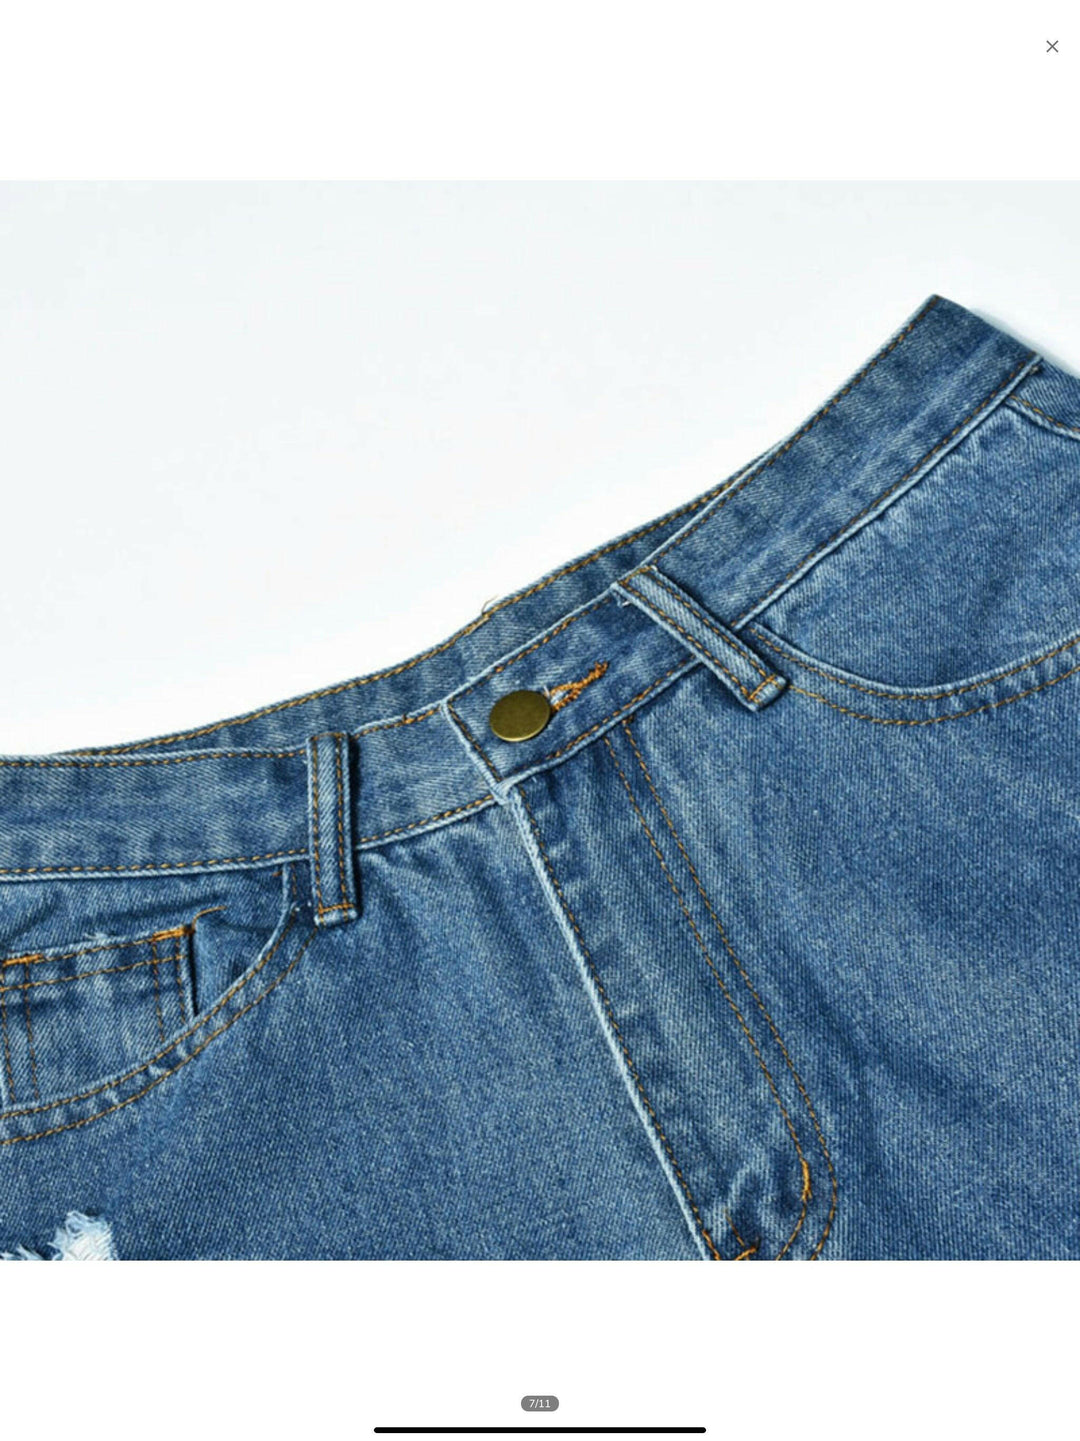 Kale ripped Designed Slim fit jeans. - La Belle Gina Boutique